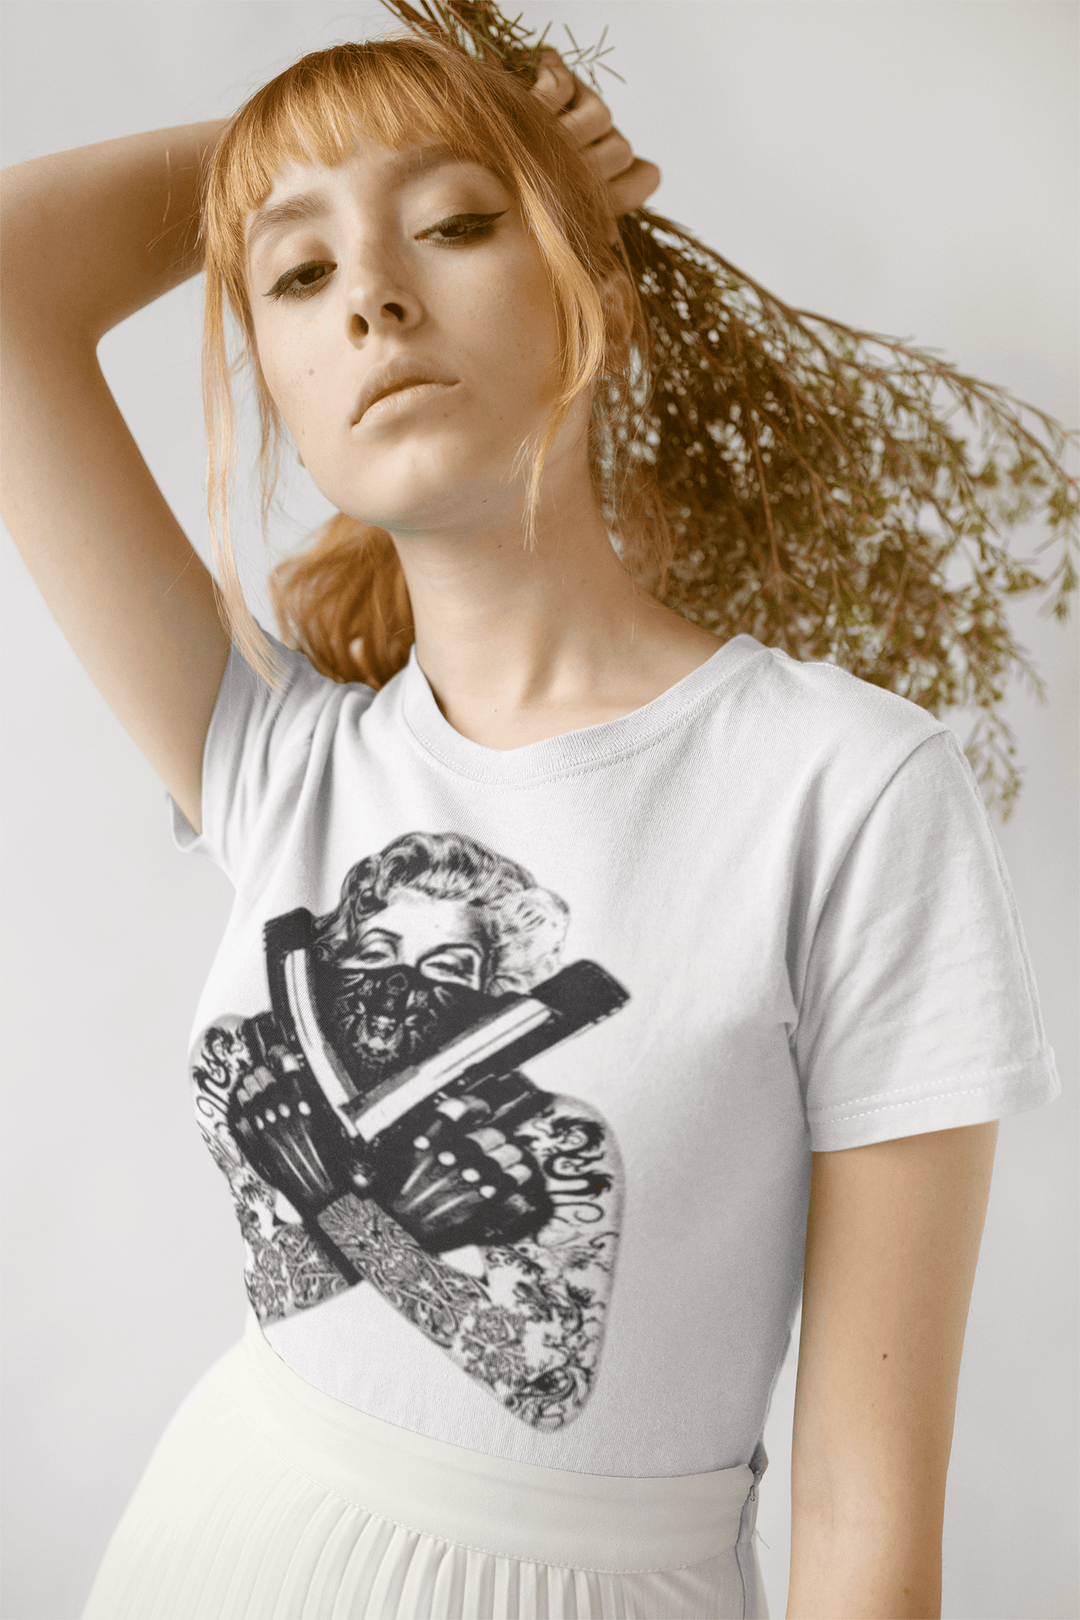 Iconic 50's Pin Up Girl T-shirt Potrait Series Bandit Top Koala Softstyle Tee - TopKoalaTee